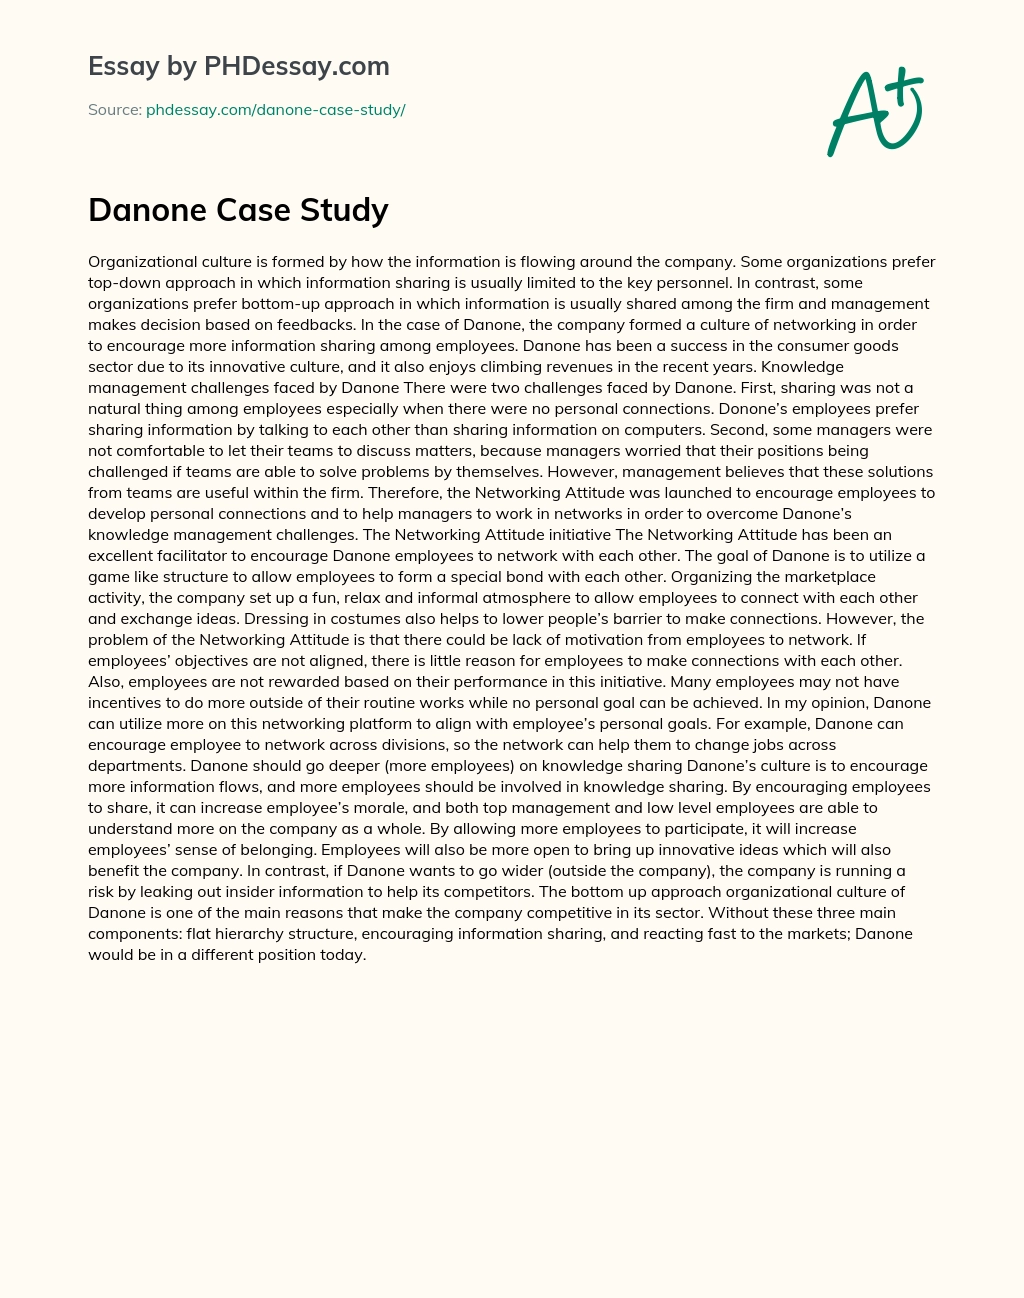 Danone Case Study essay